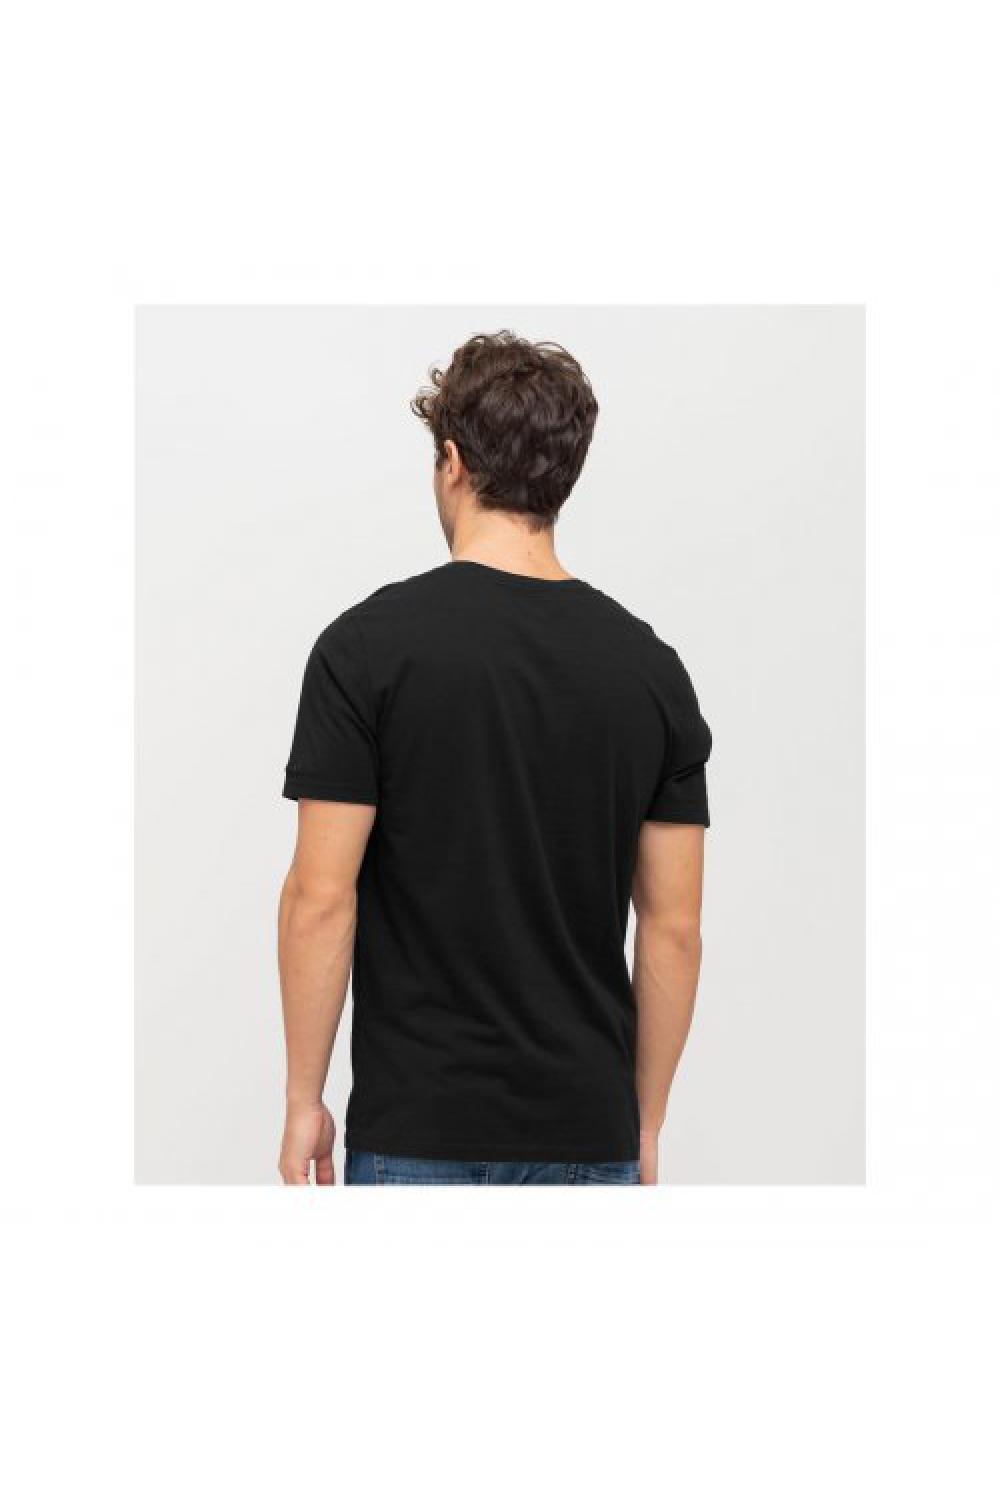 STAFF T-shirt Base Men - Black (64-016.047-N0090)